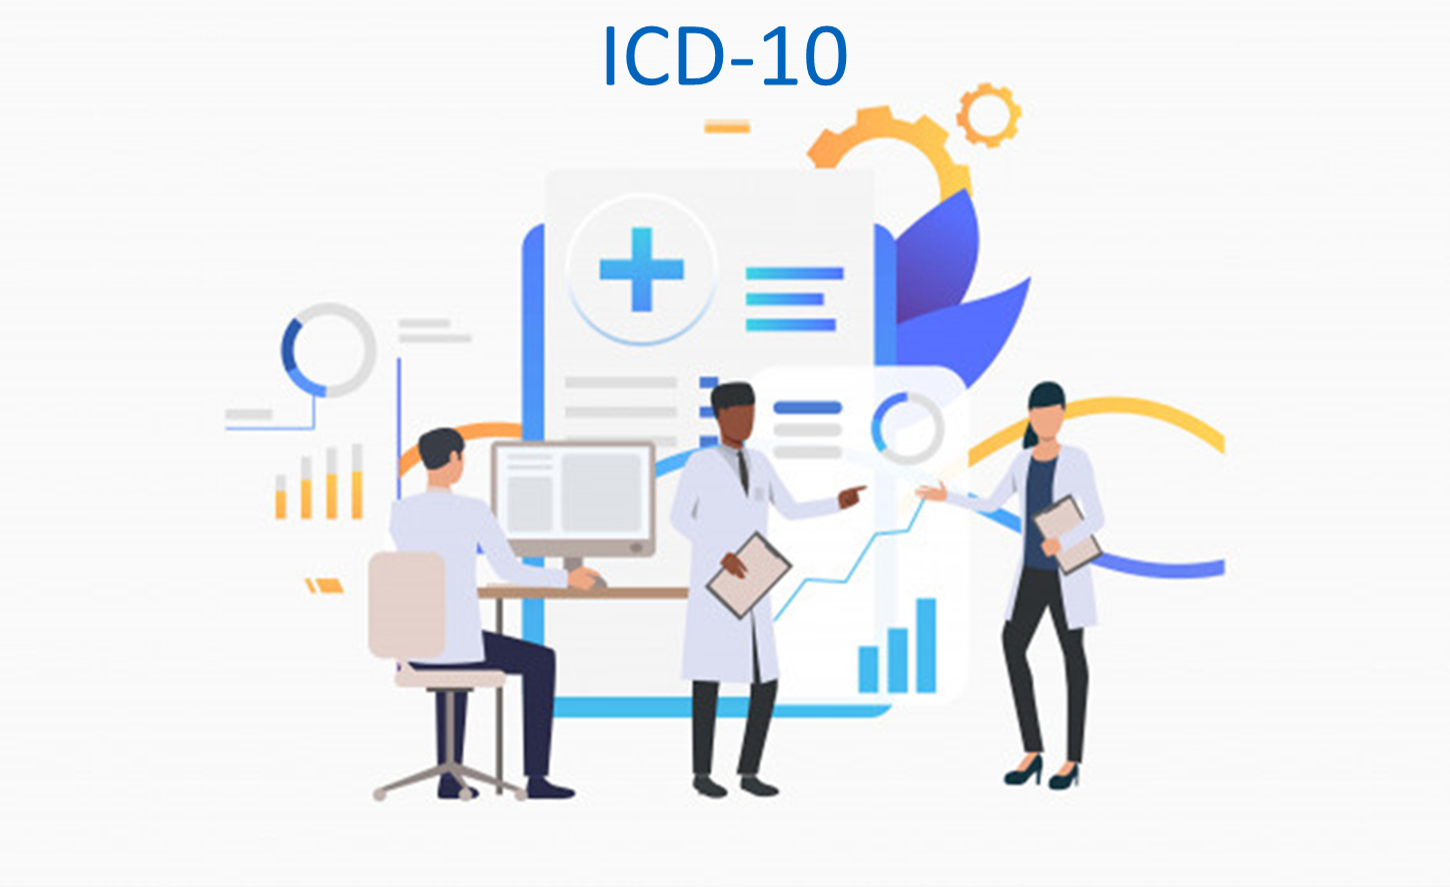 ICD-10 Terminology